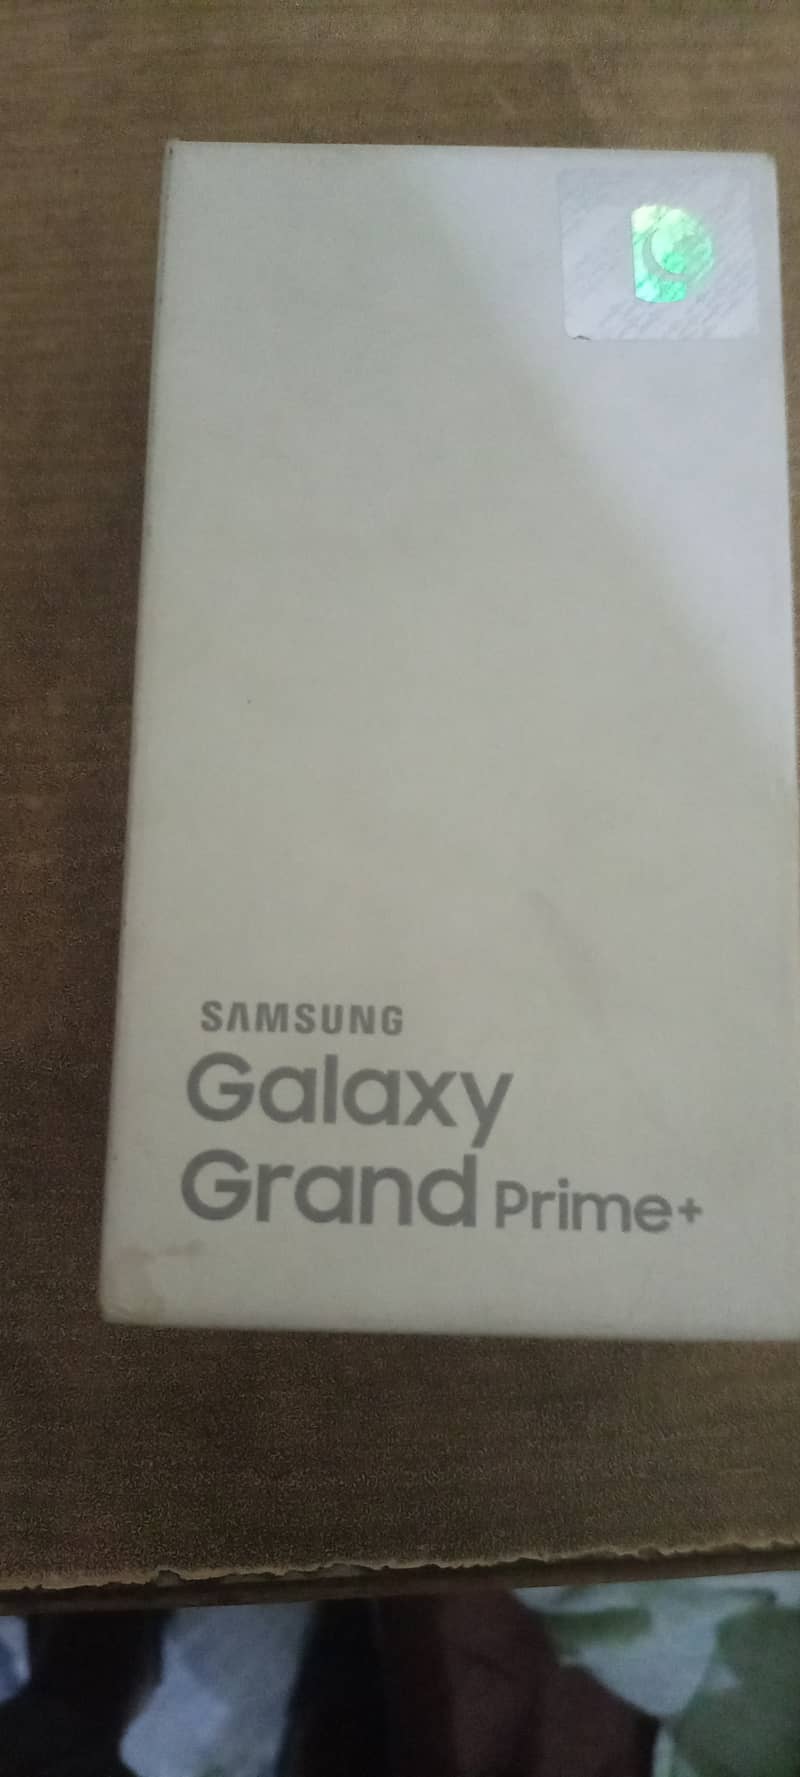 Samsung Galaxy Grand Prime+ 1